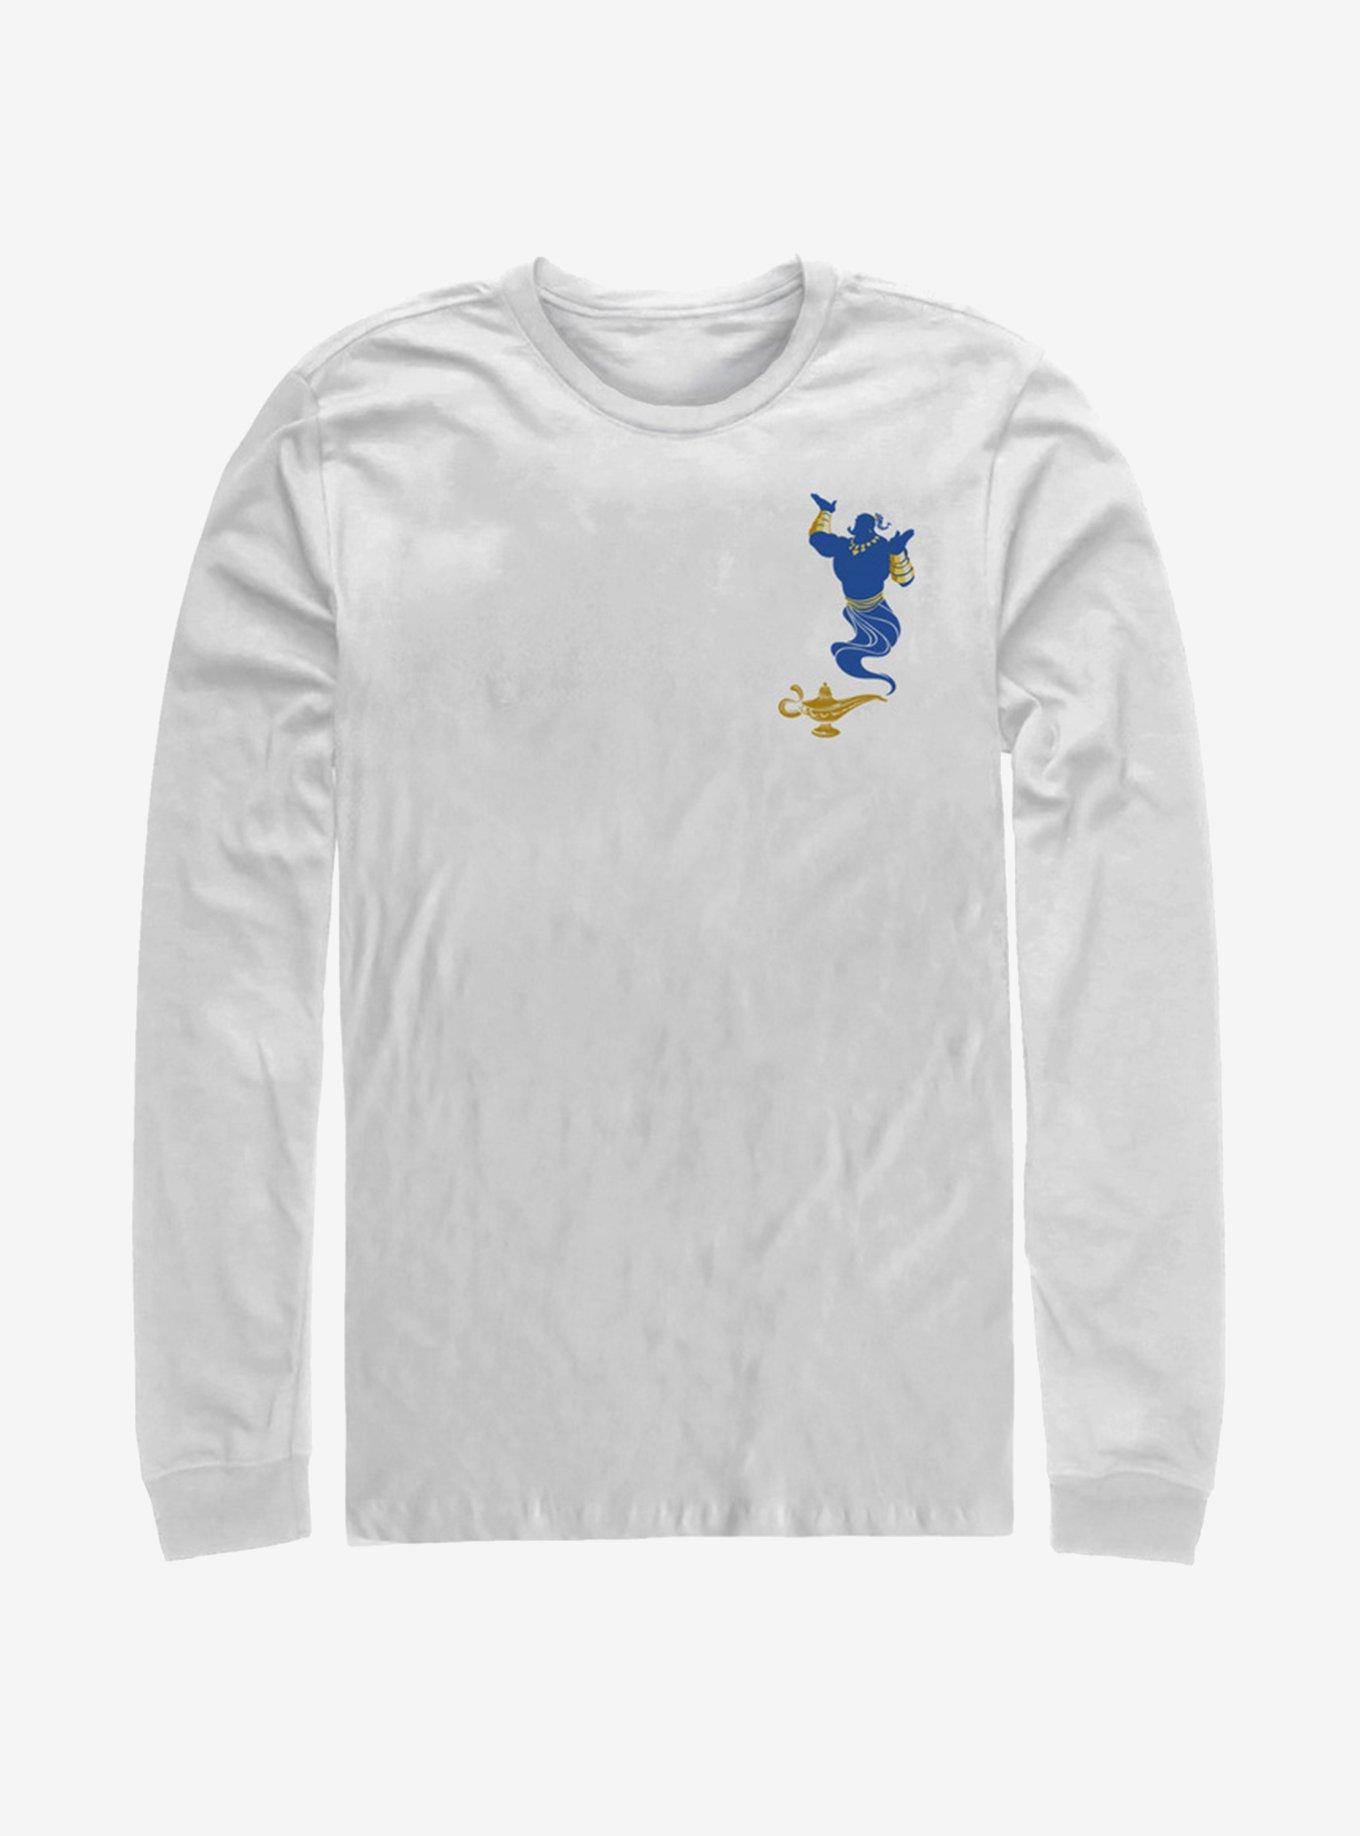 Disney Aladdin 2019 Pocket Lamp Long-Sleeve T-Shirt , WHITE, hi-res